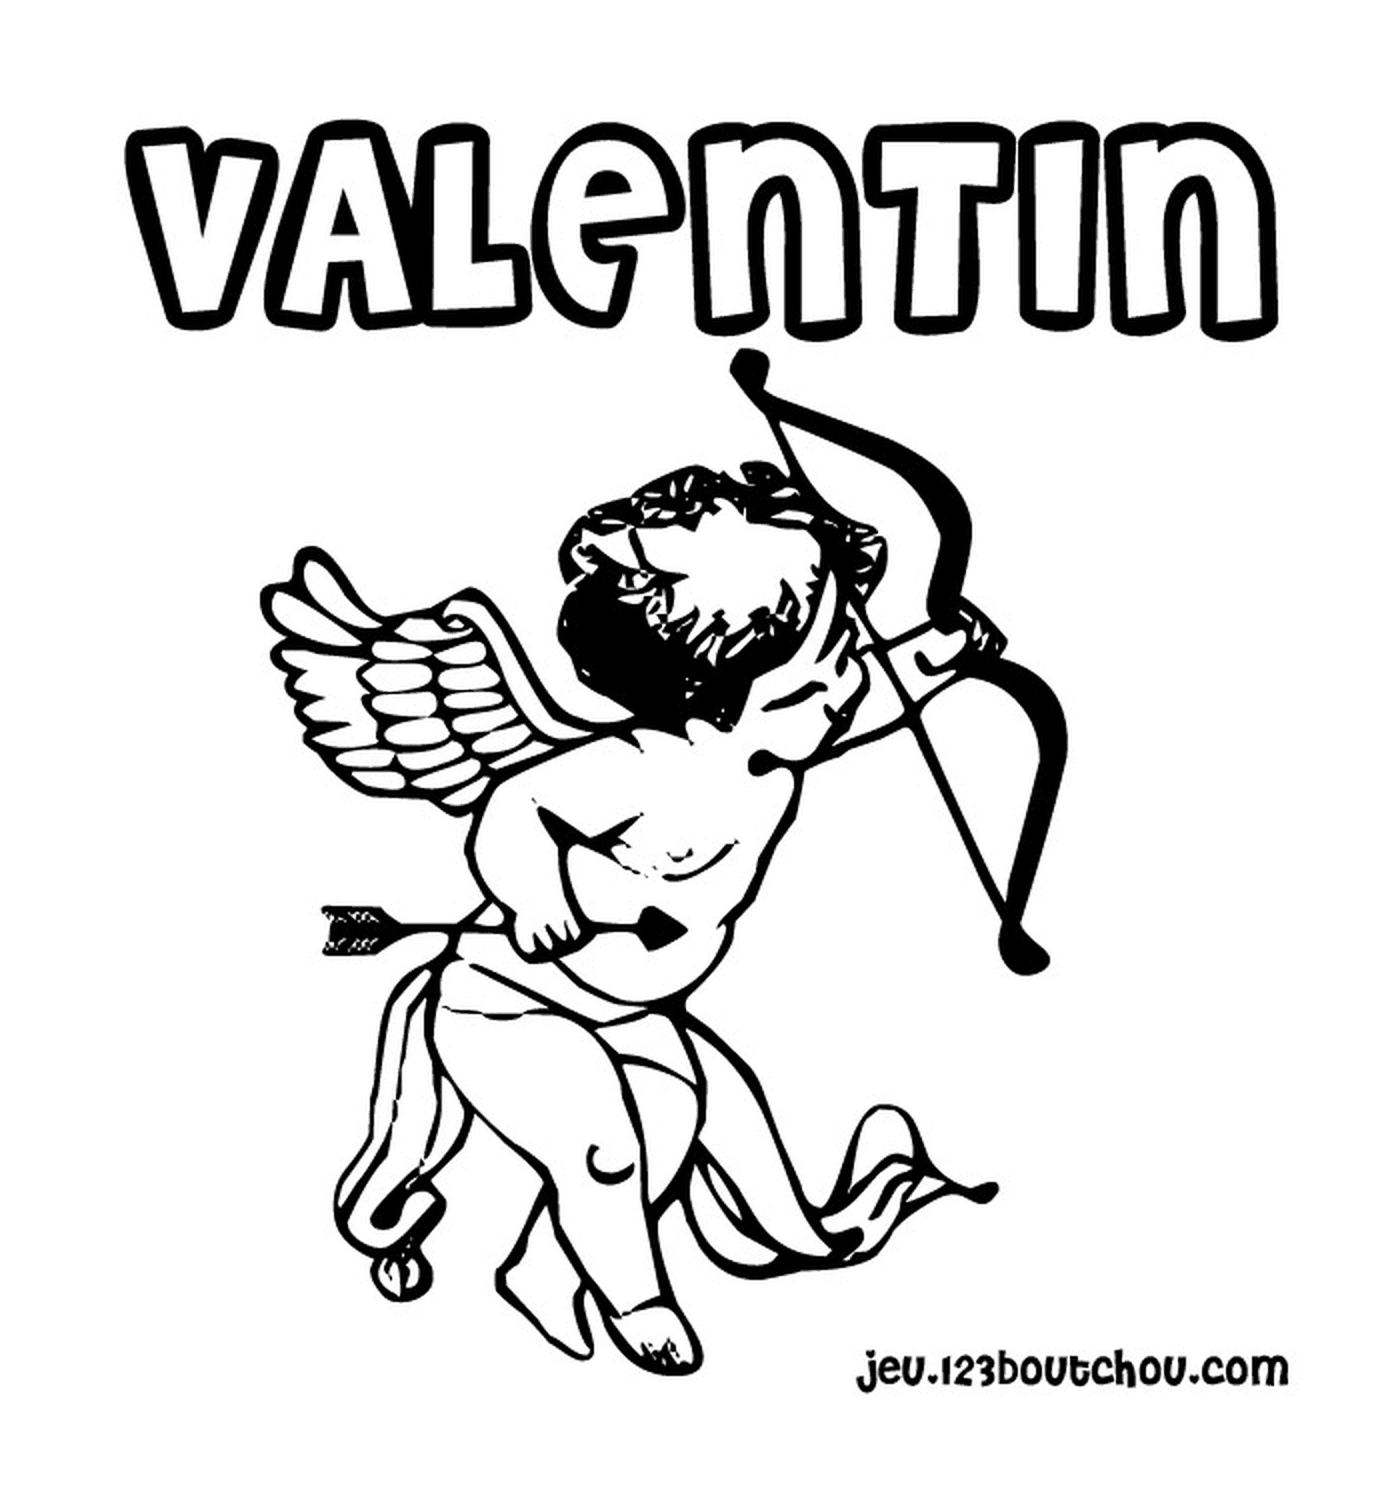   Saint-Valentin, Cupidon joueur 